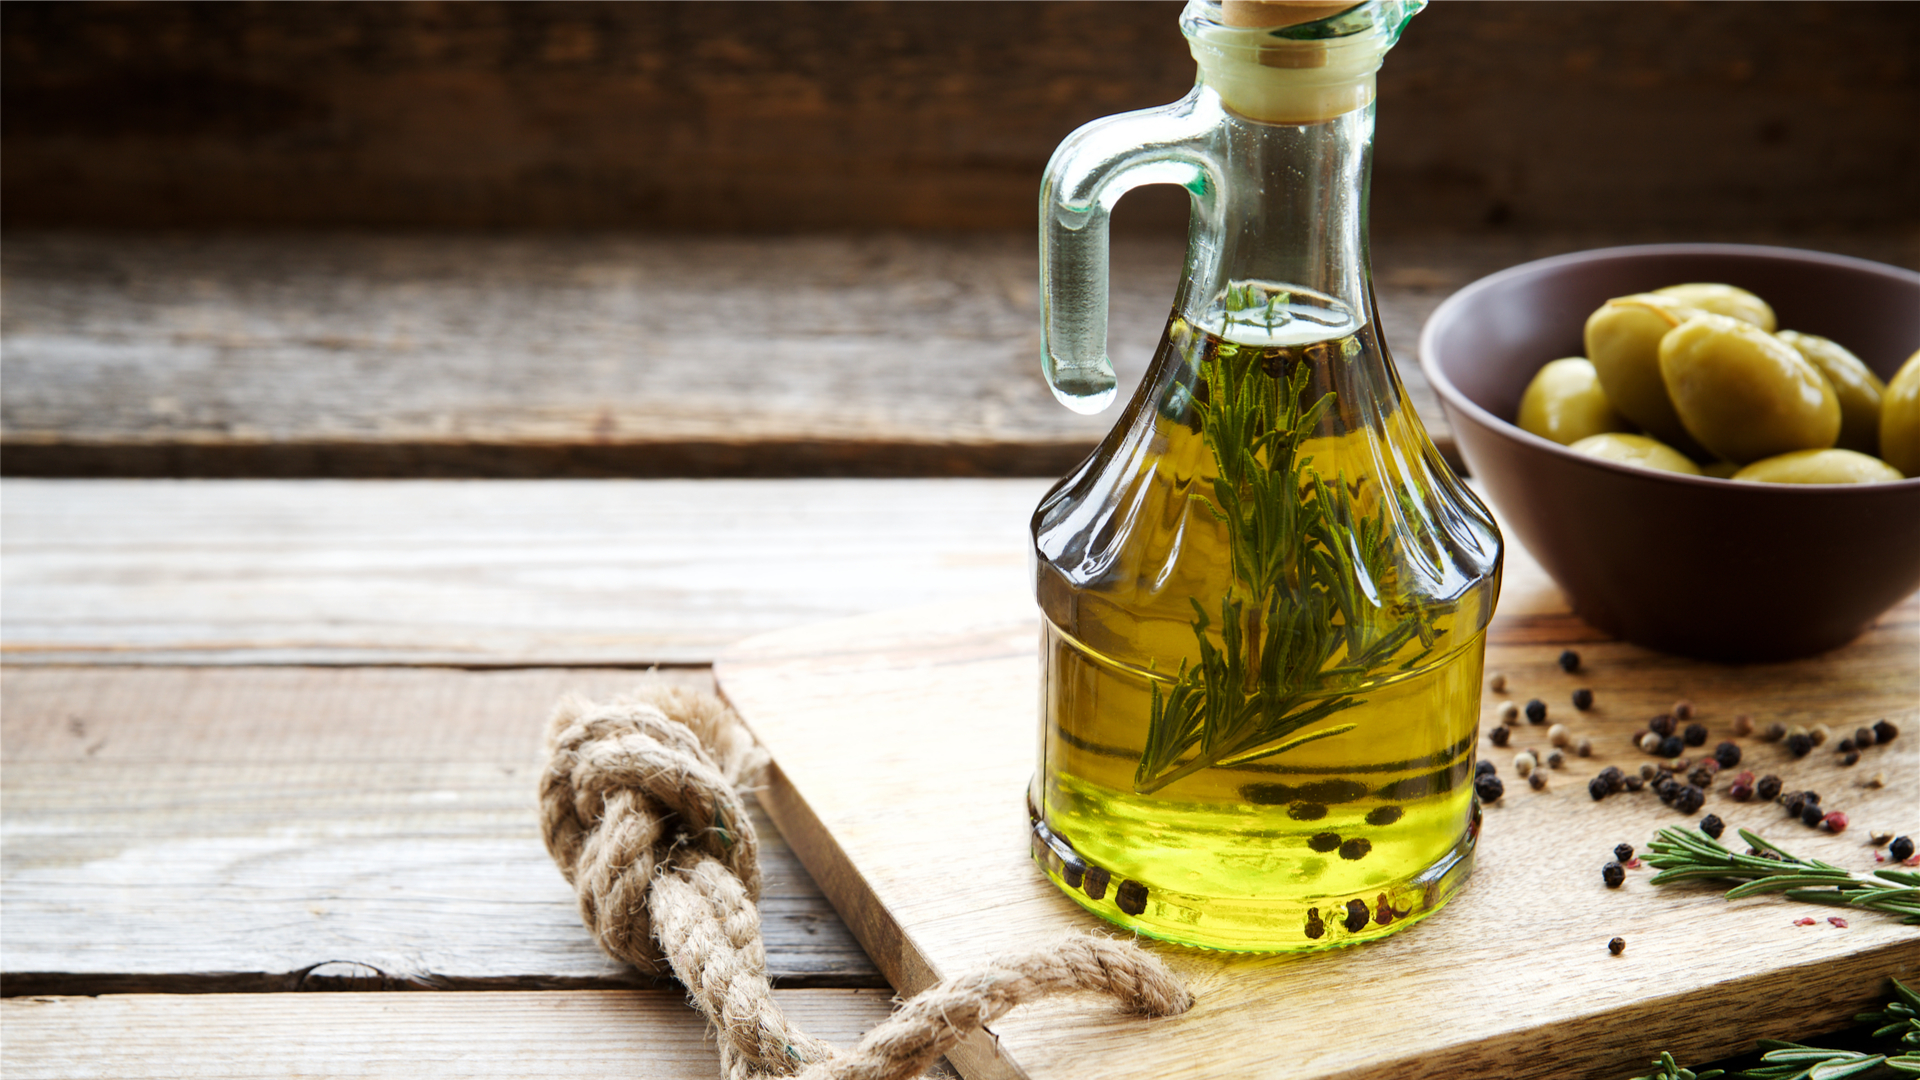 A bottle of olive oil. Оливковое масло. Растительное масло. Масло растительное с оливковым. Оливки и оливковое масло.